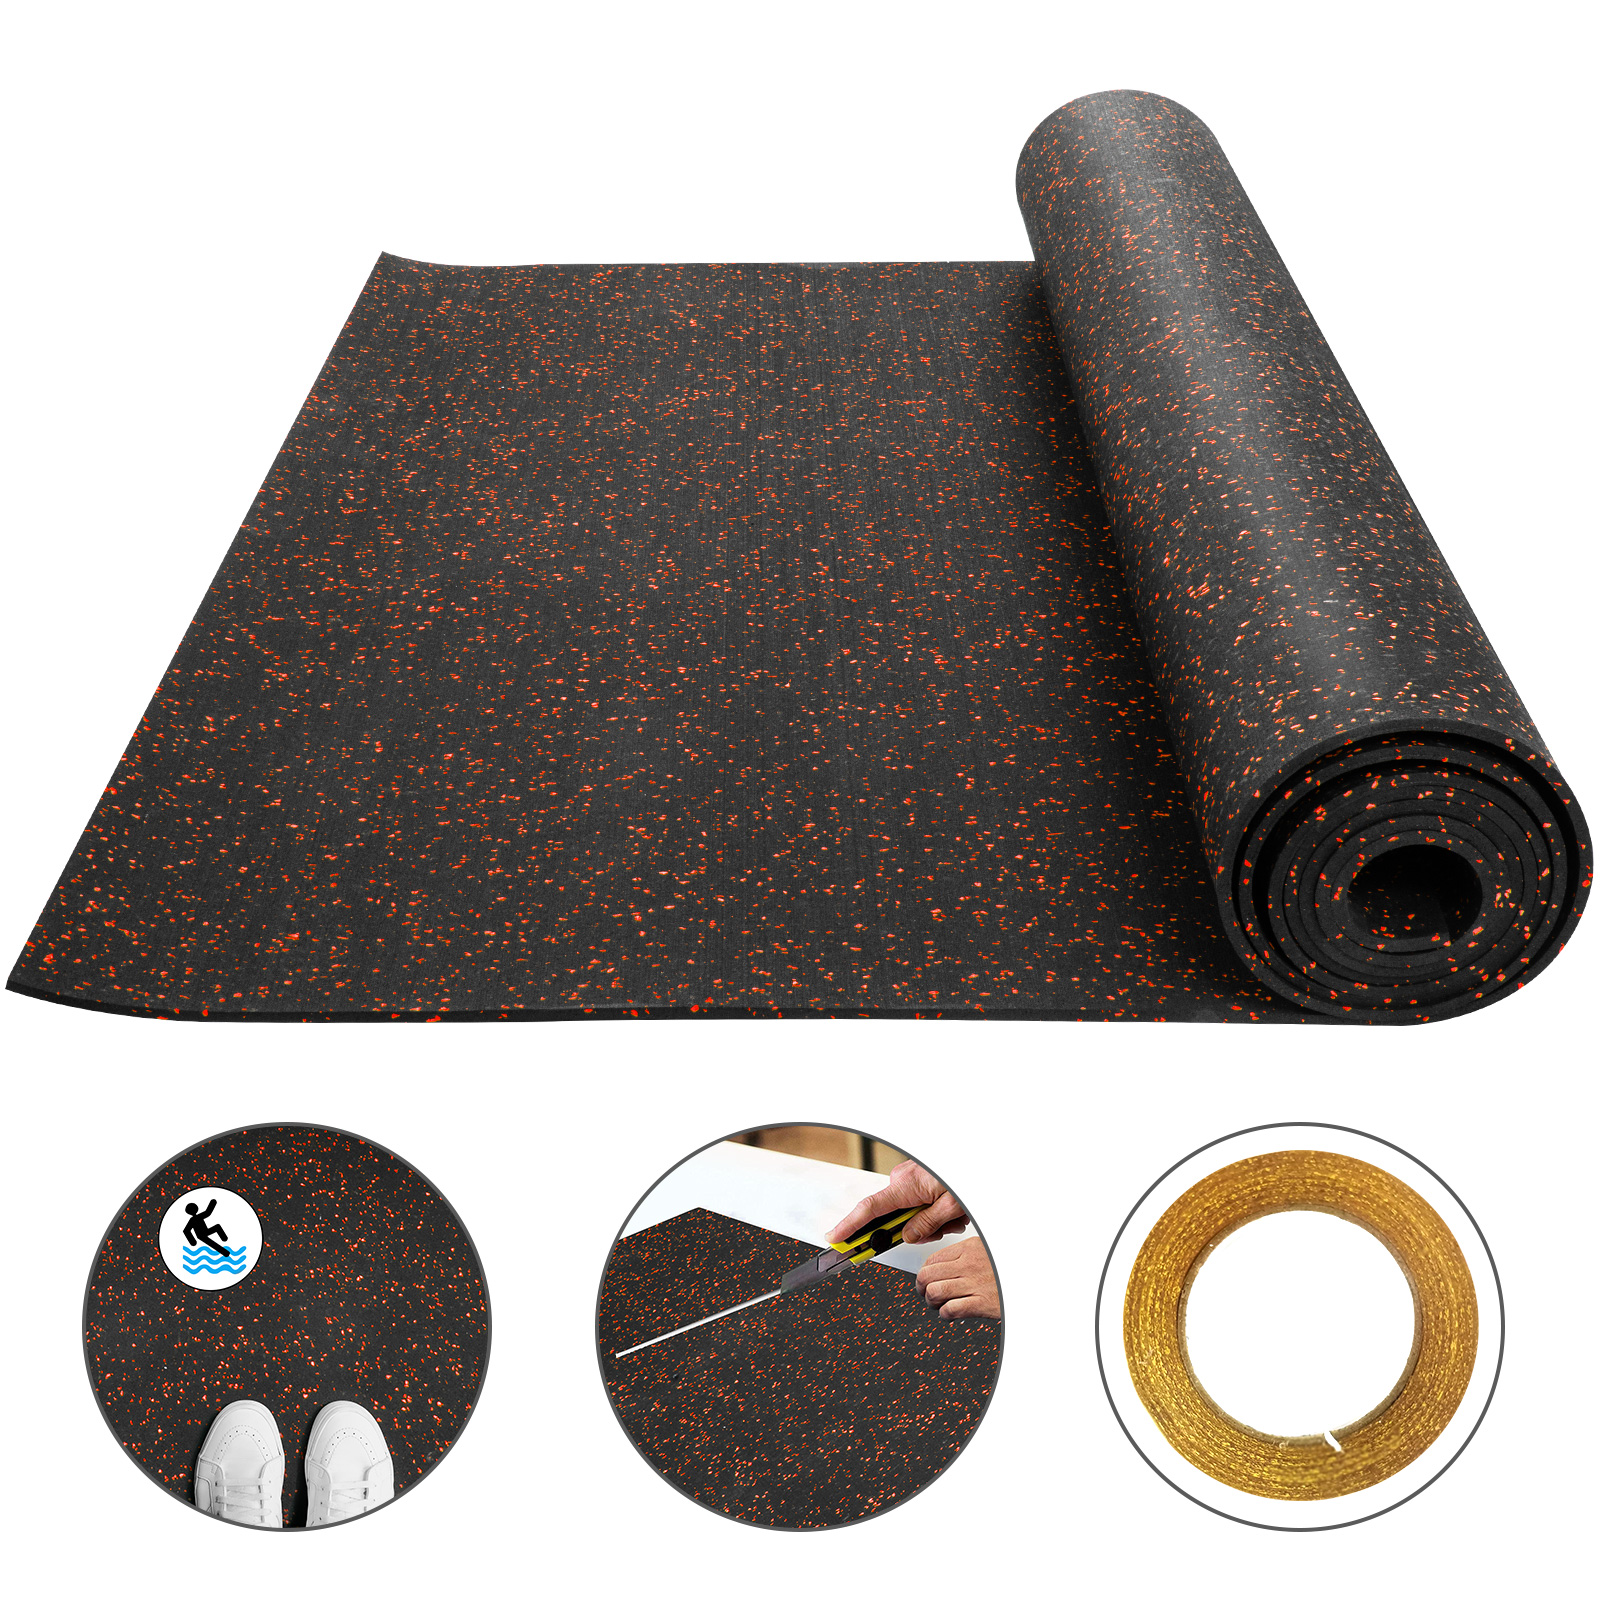 Rubber Flooring Mats Rolls Red Speckle 9.5mm 3.6'x10.2' Home Gym Equipment Mat от Vevor Many GEOs